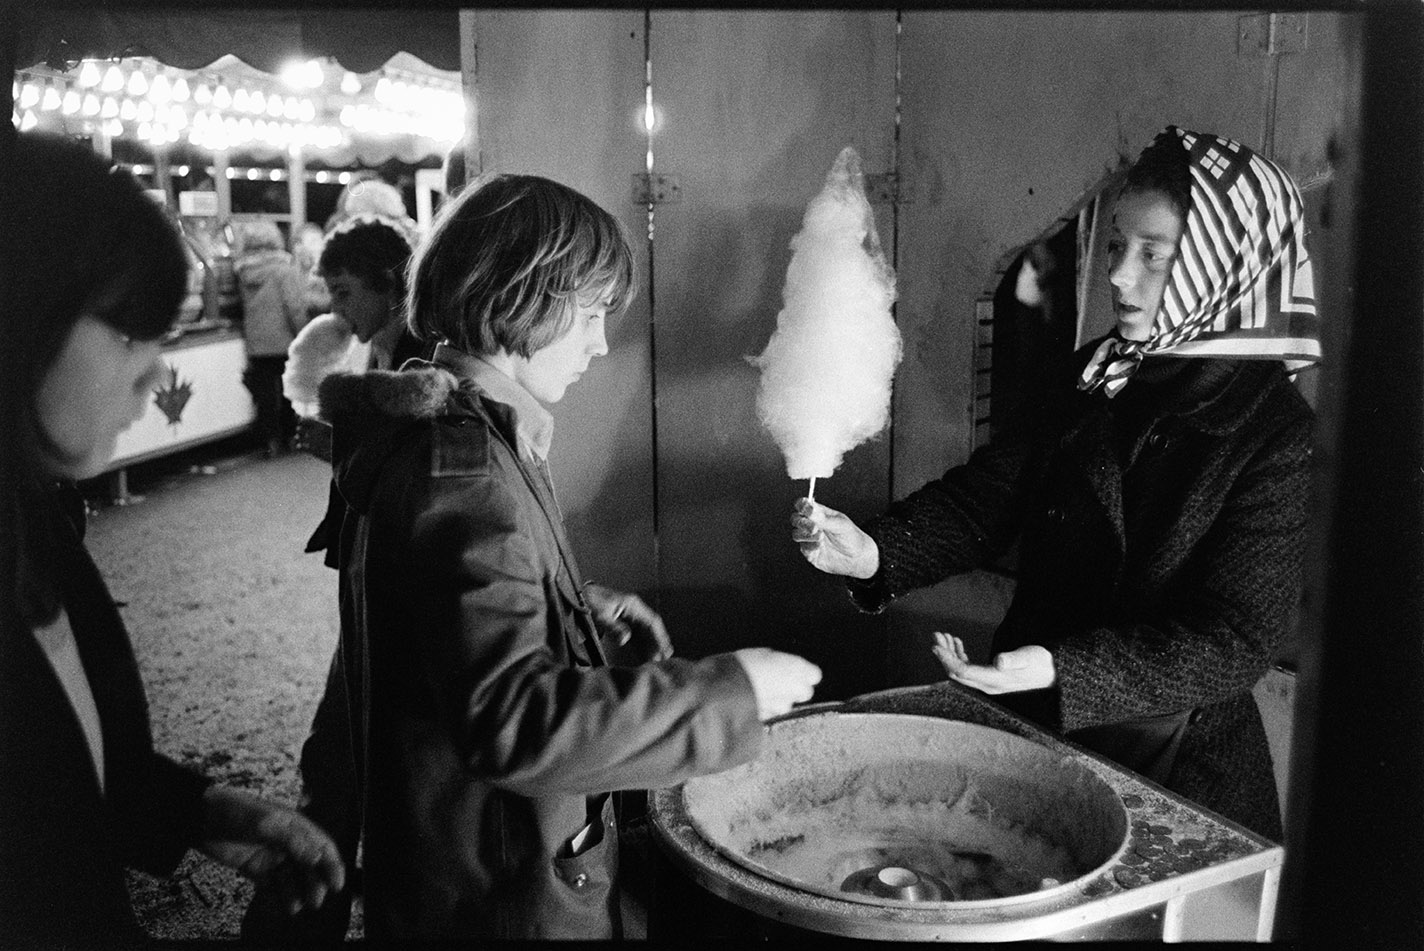 Woman selling candy floss, Torrington Fair, 2 November 1974